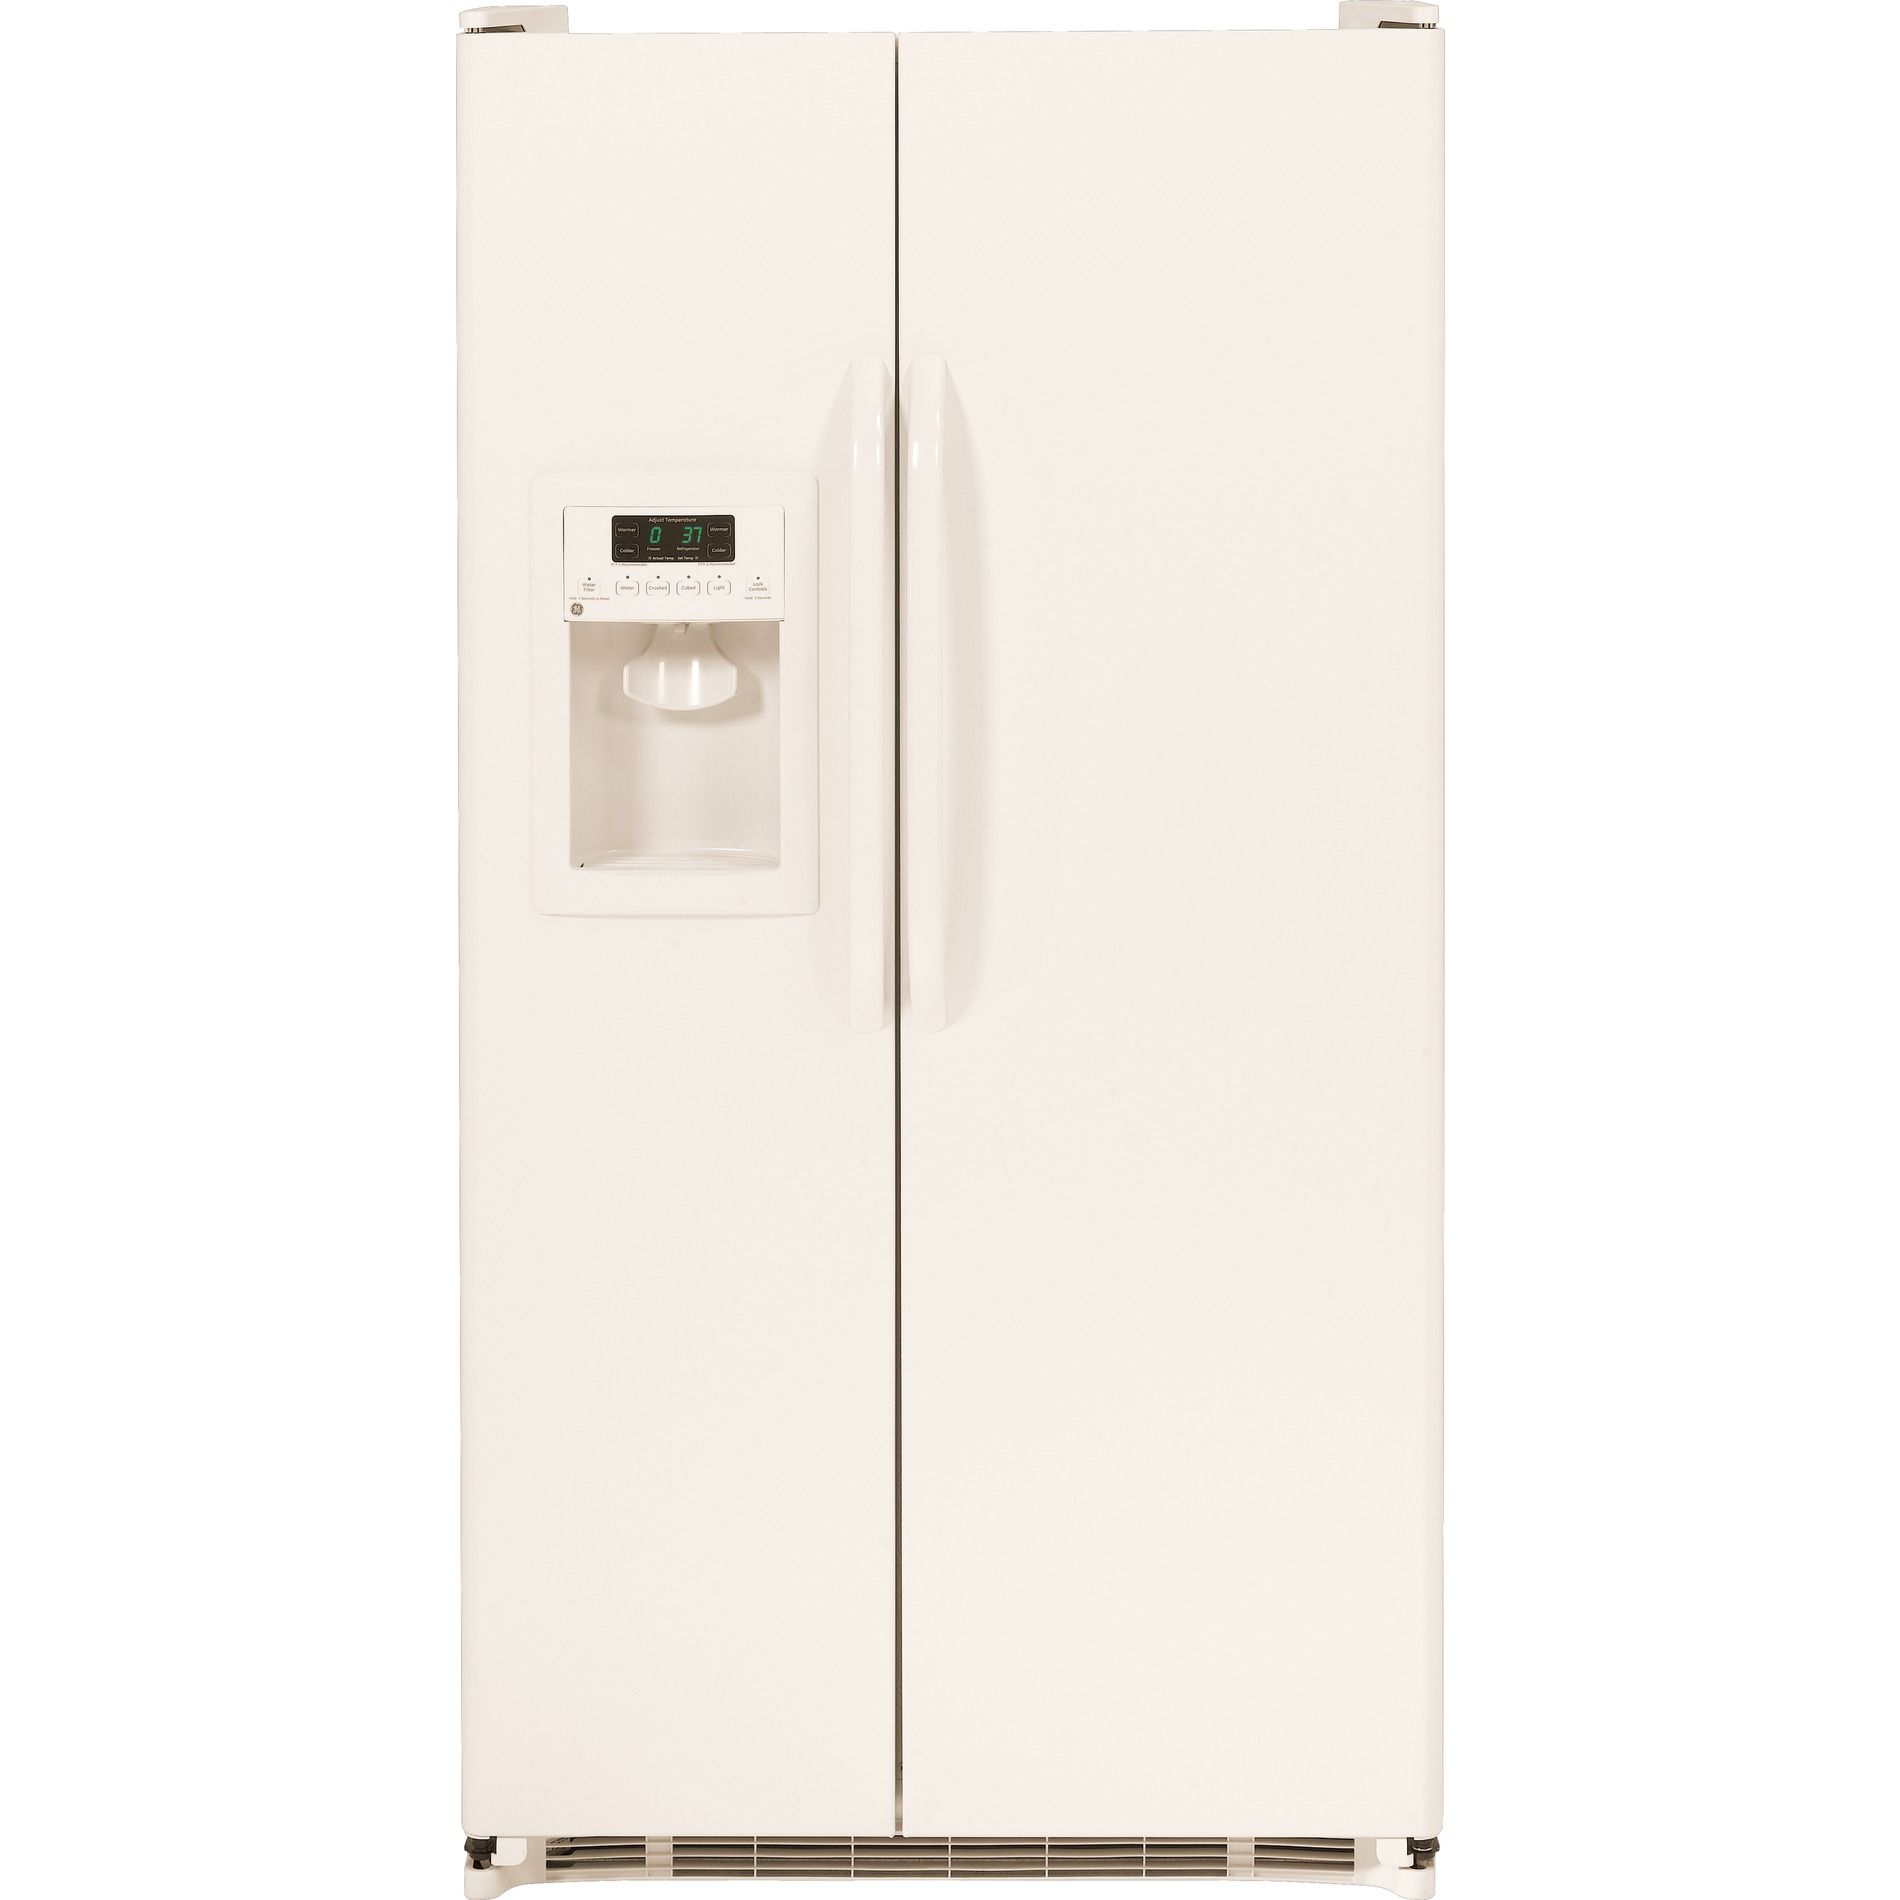 Refrigerator - D Series logo